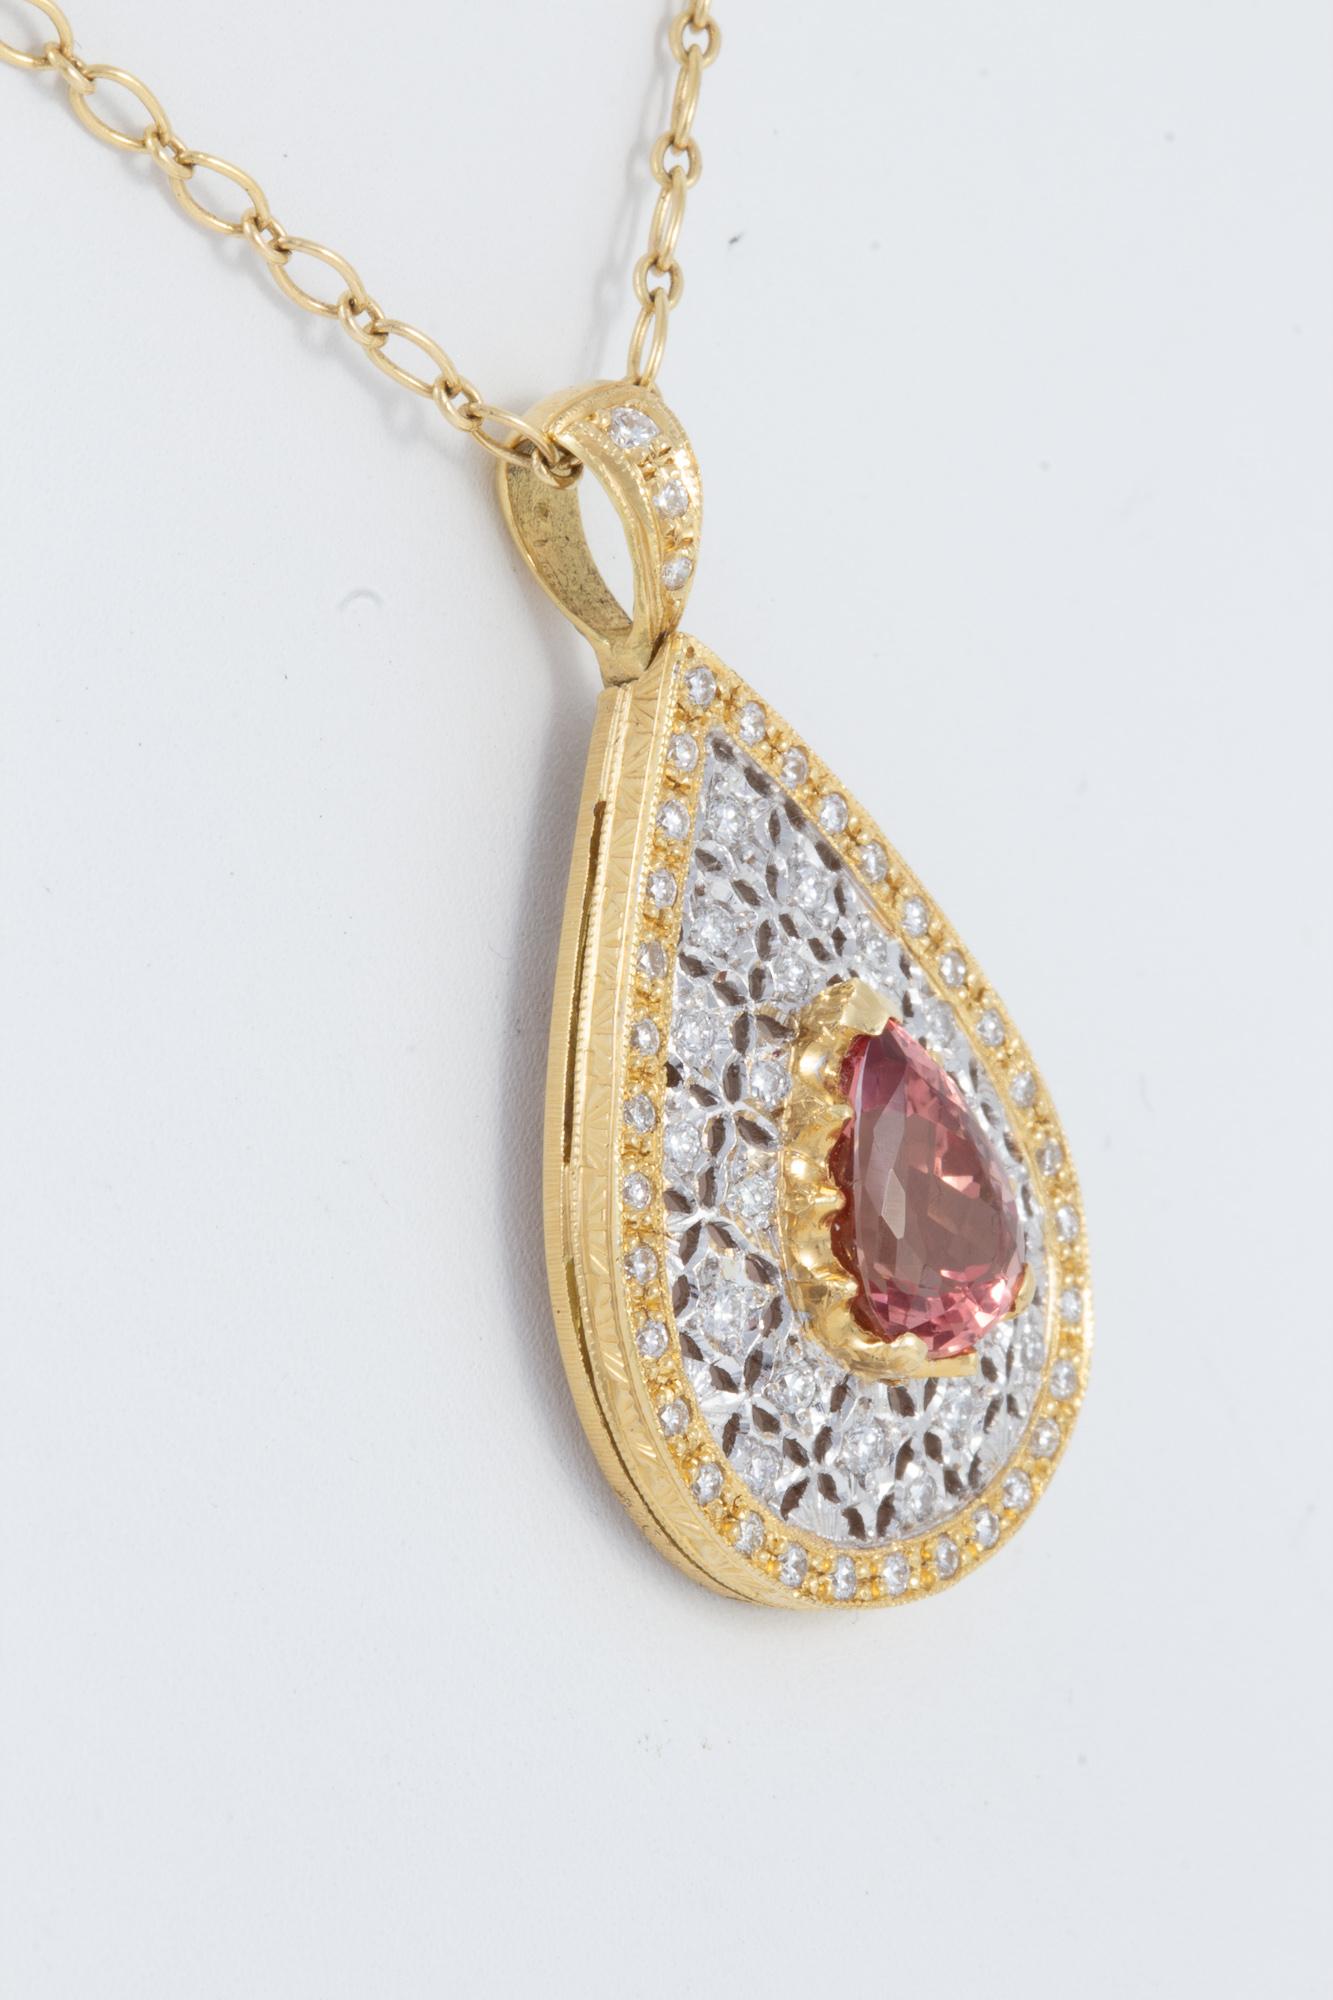 Pear Cut Italian Florentine Engraved Pendant Featuring 2.63 carat Imperial Topaz For Sale